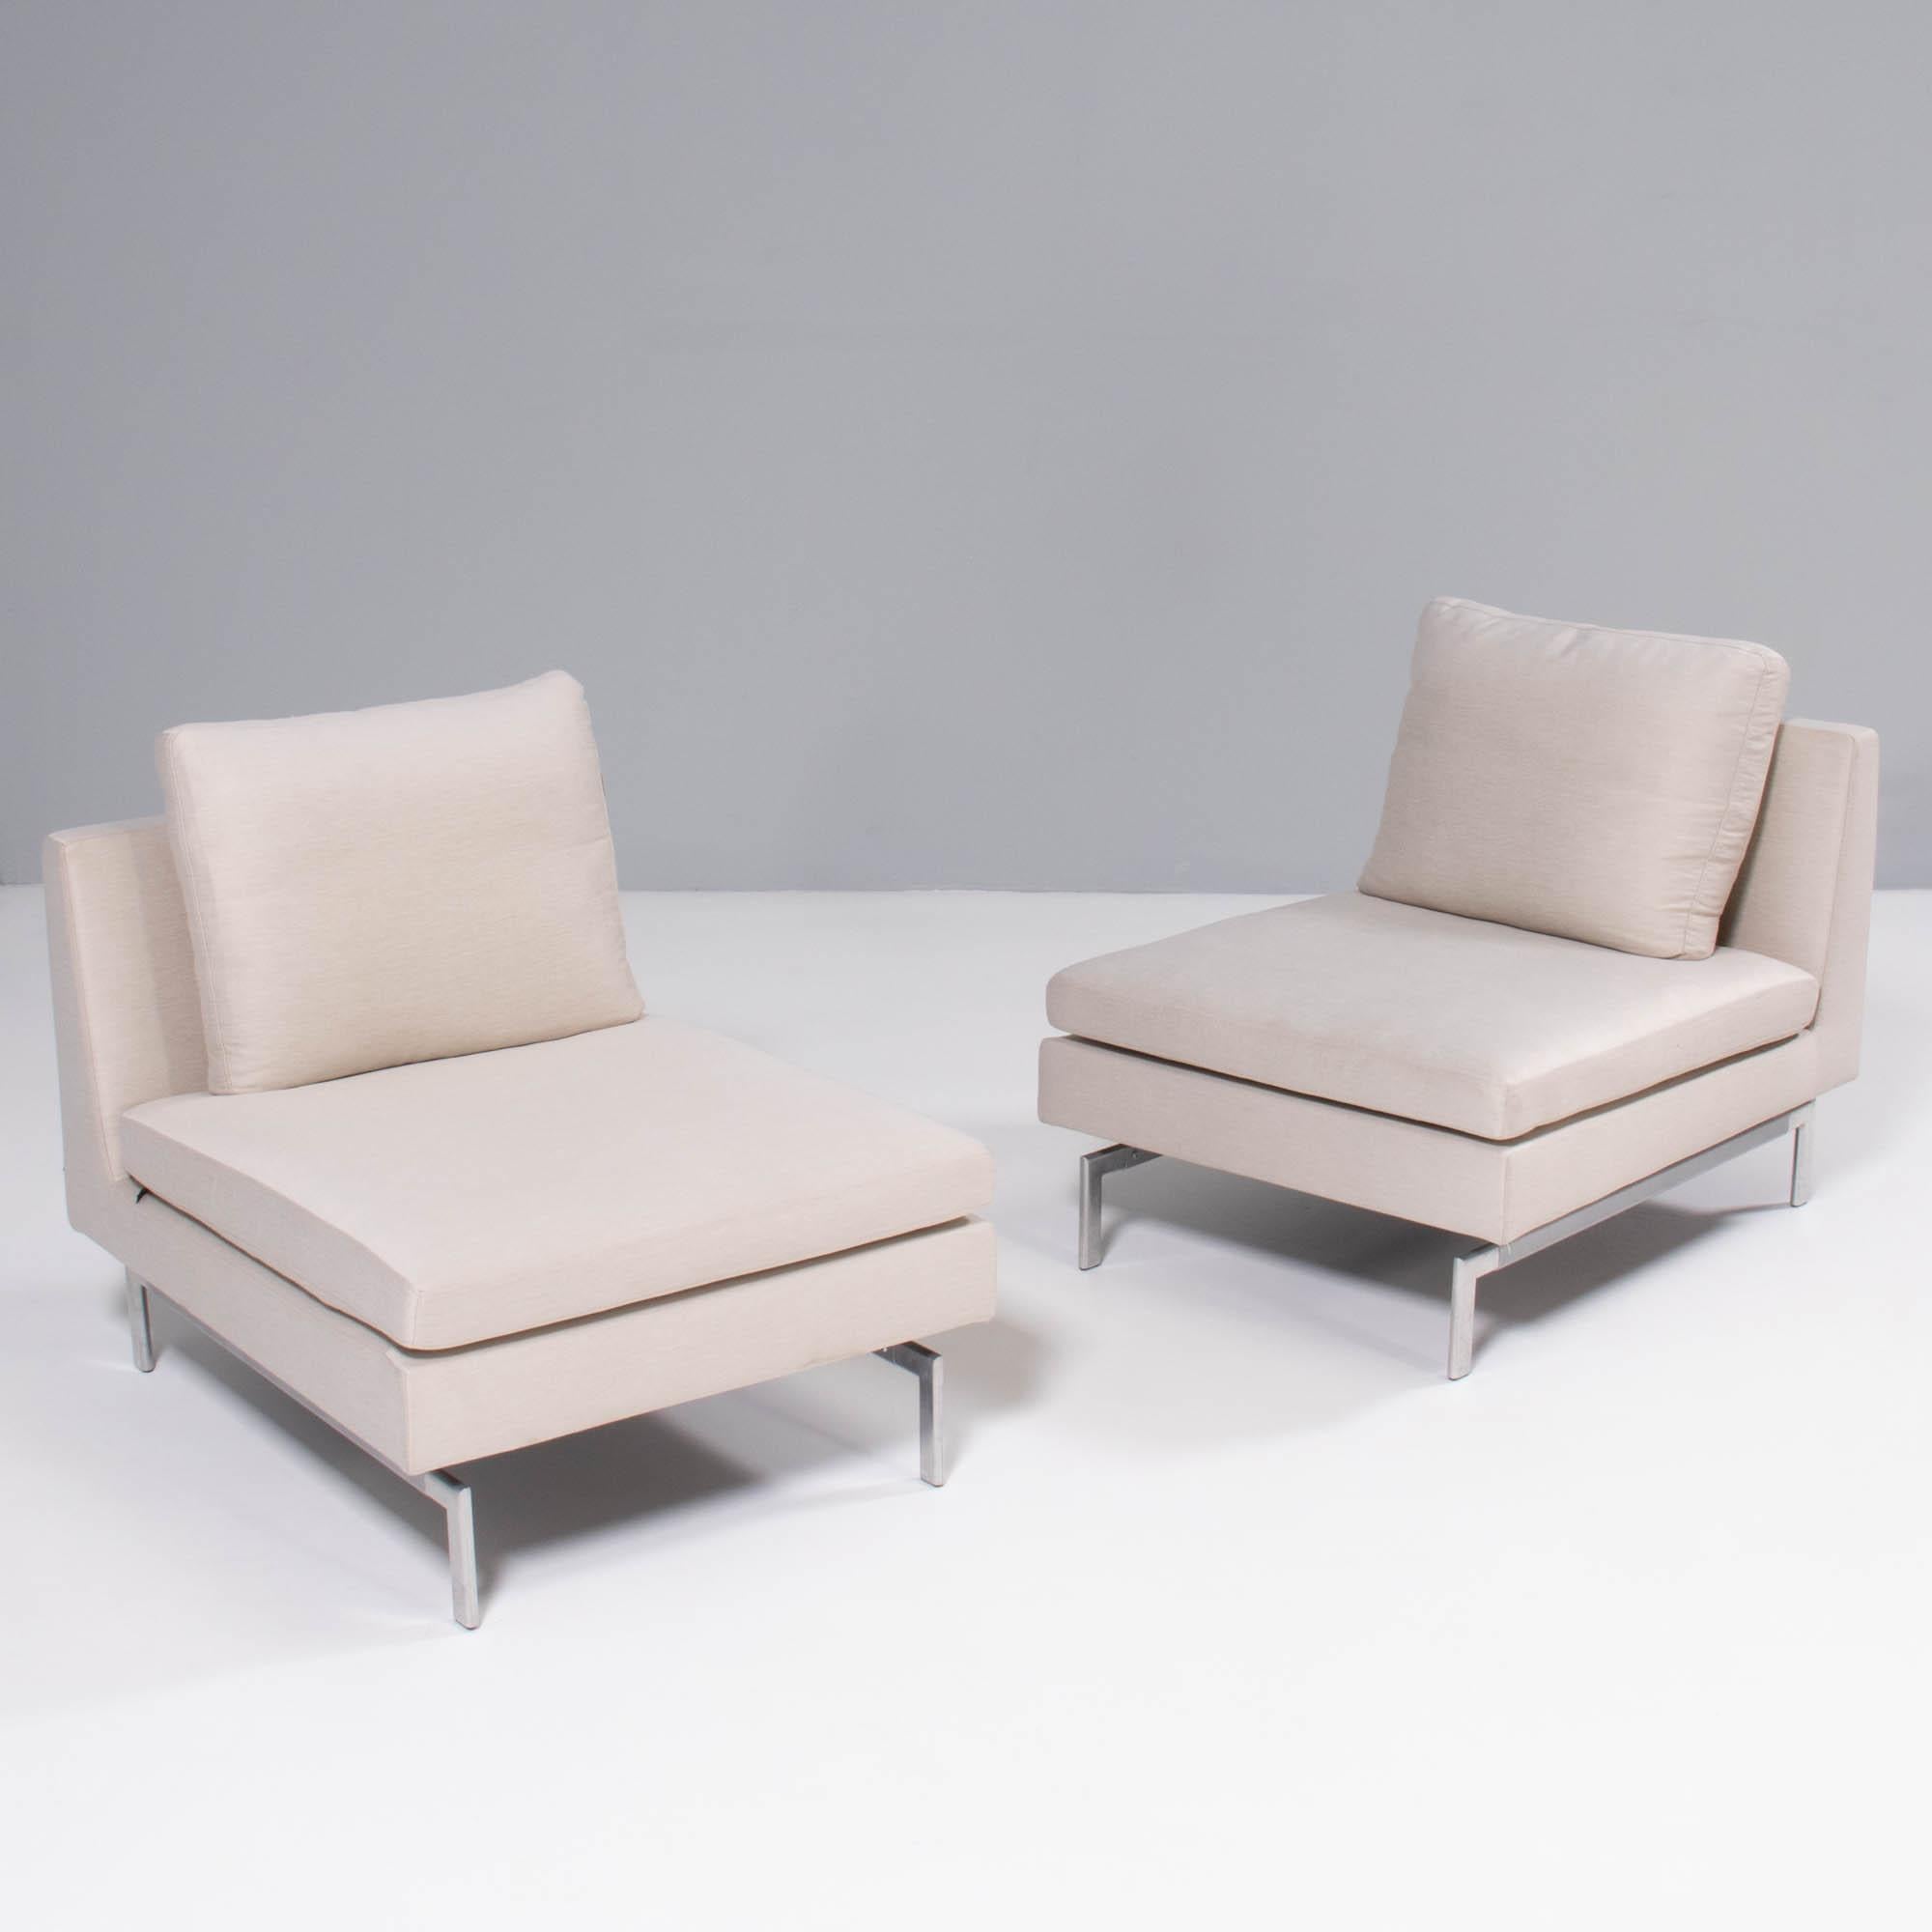 Contemporary Ligne Roset by Didier Gomez Stricto Sensu Cream Fireside Chair, Set of 2